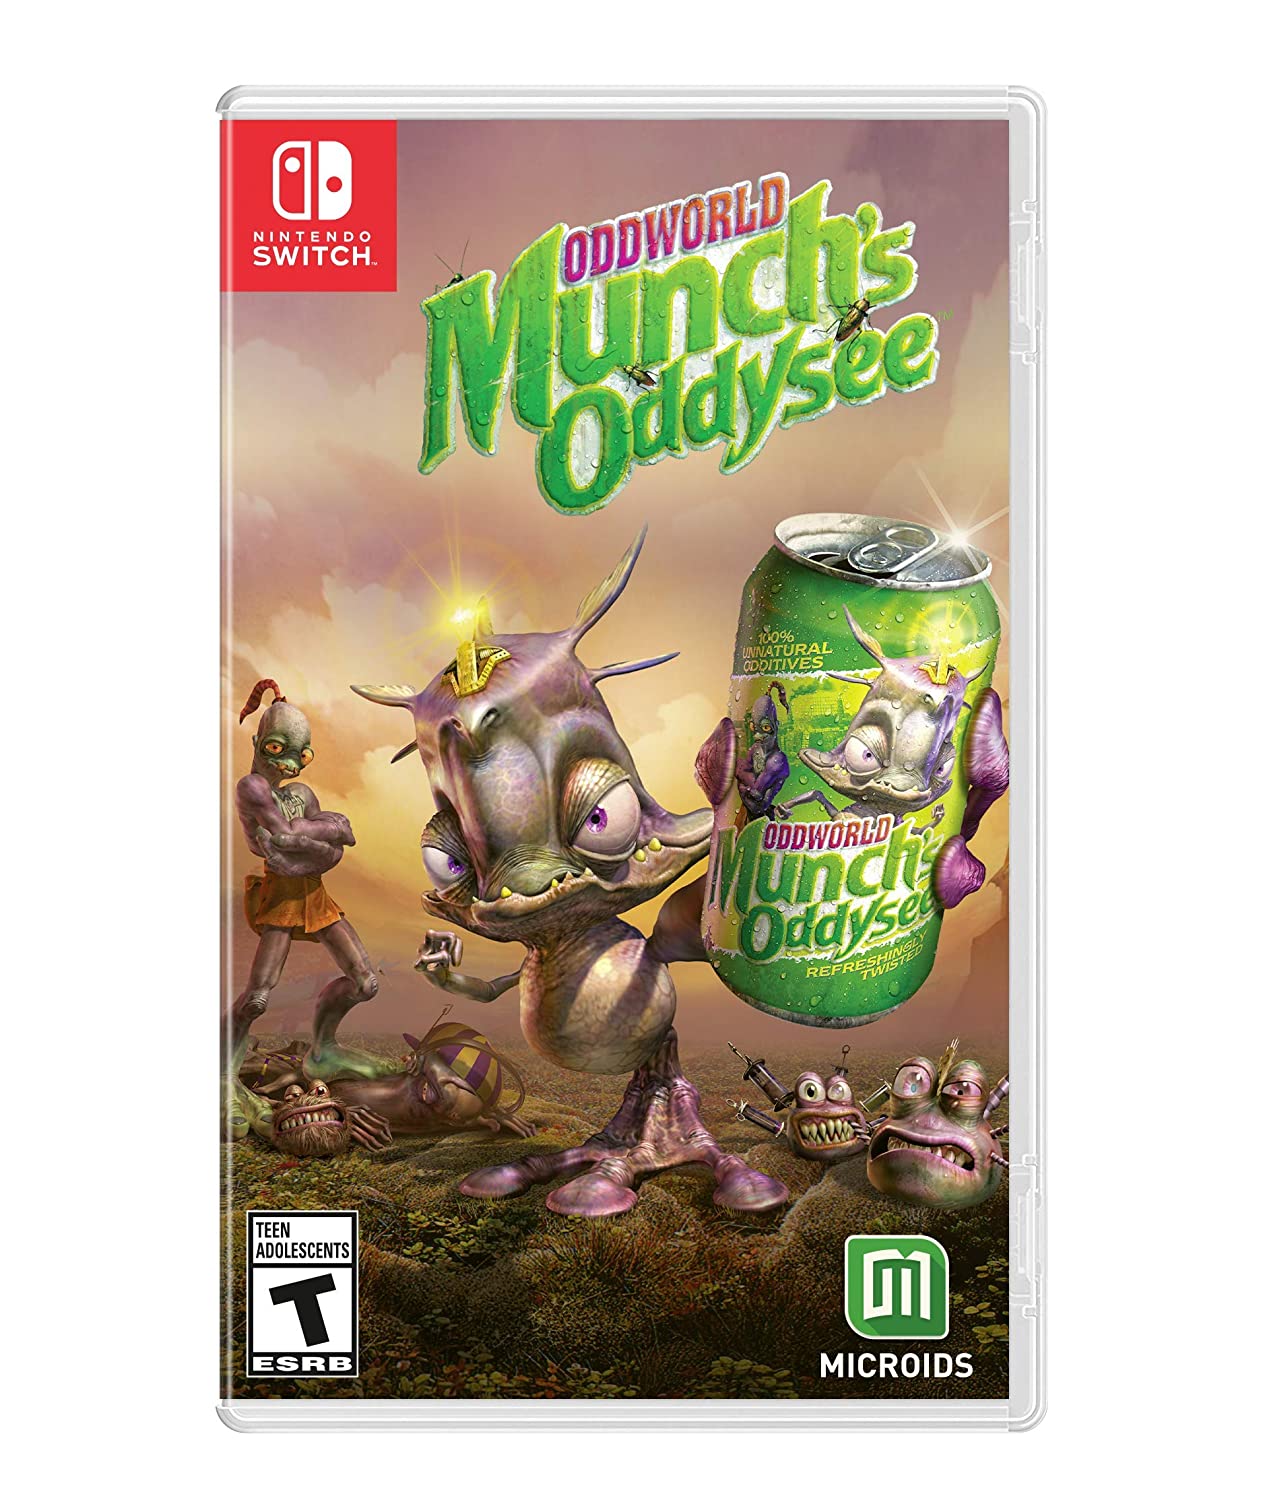 Oddworld: Munch's Oddysee (Nintendo Switch) $14.99 @ Amazon / GameStop